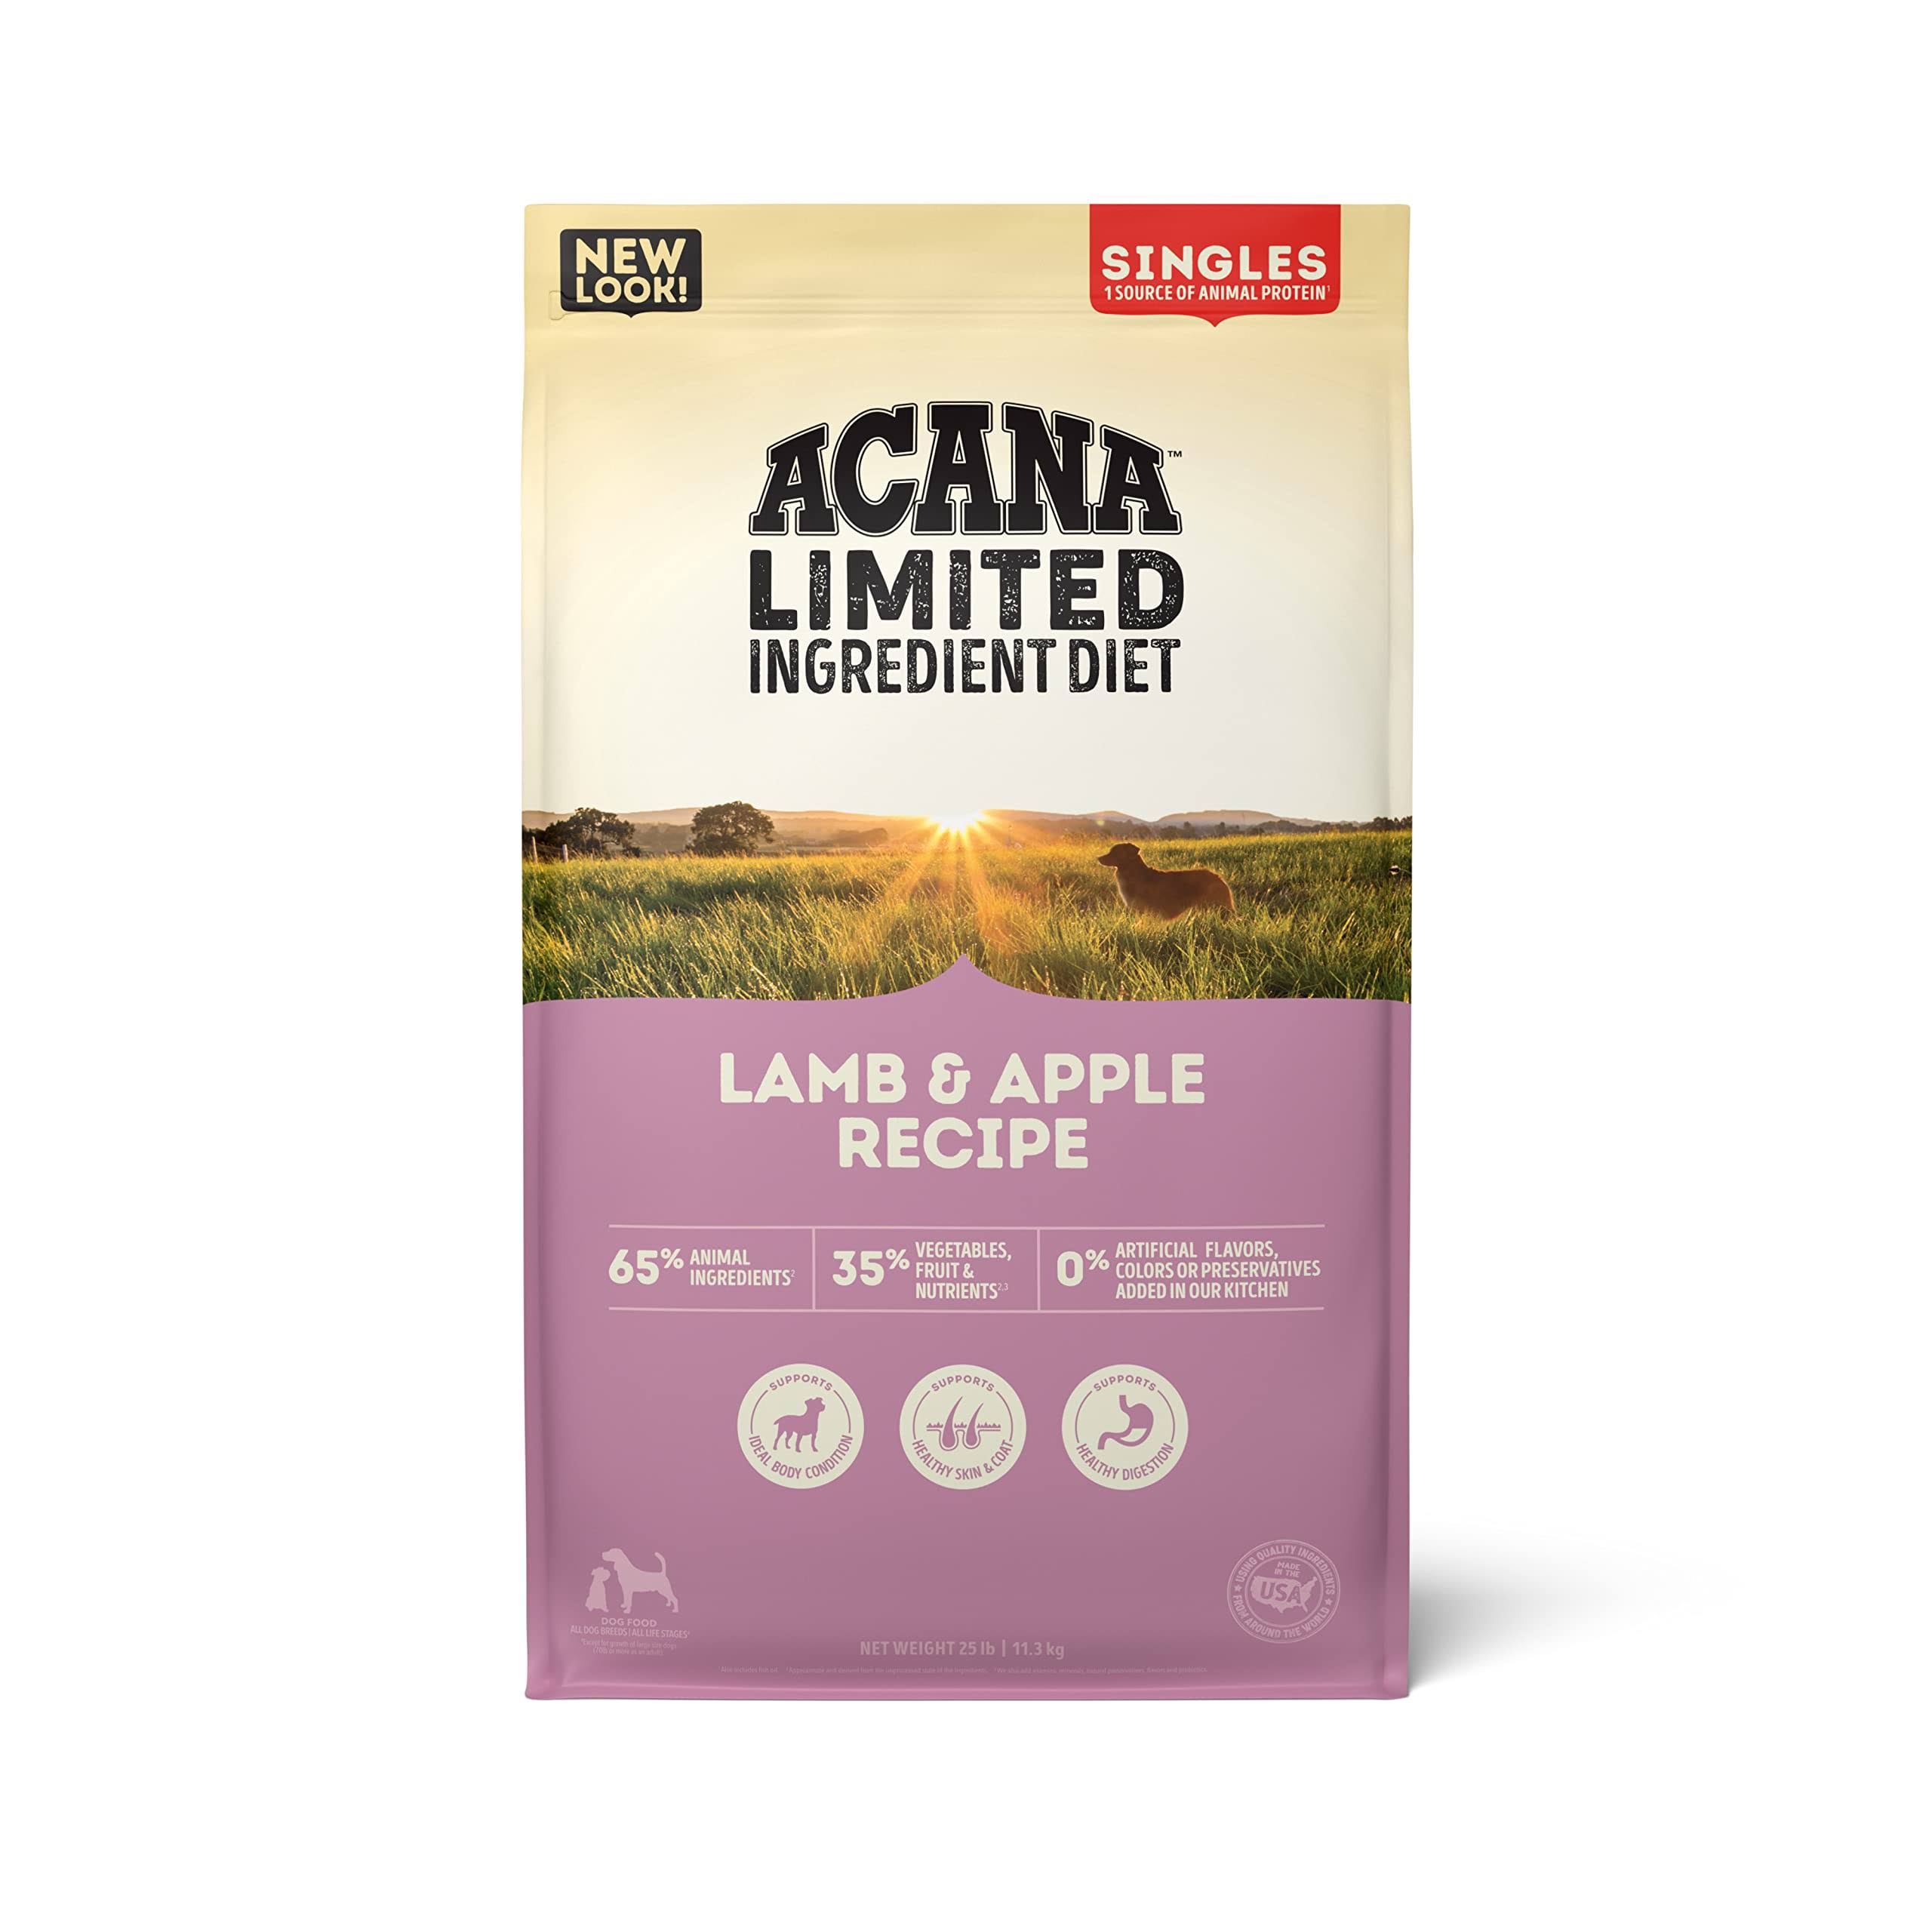 Acana Singles Limited Ingredient Lamb & Apple Recipe Grain-Free Dry Dog Food - 25 lb. Bag